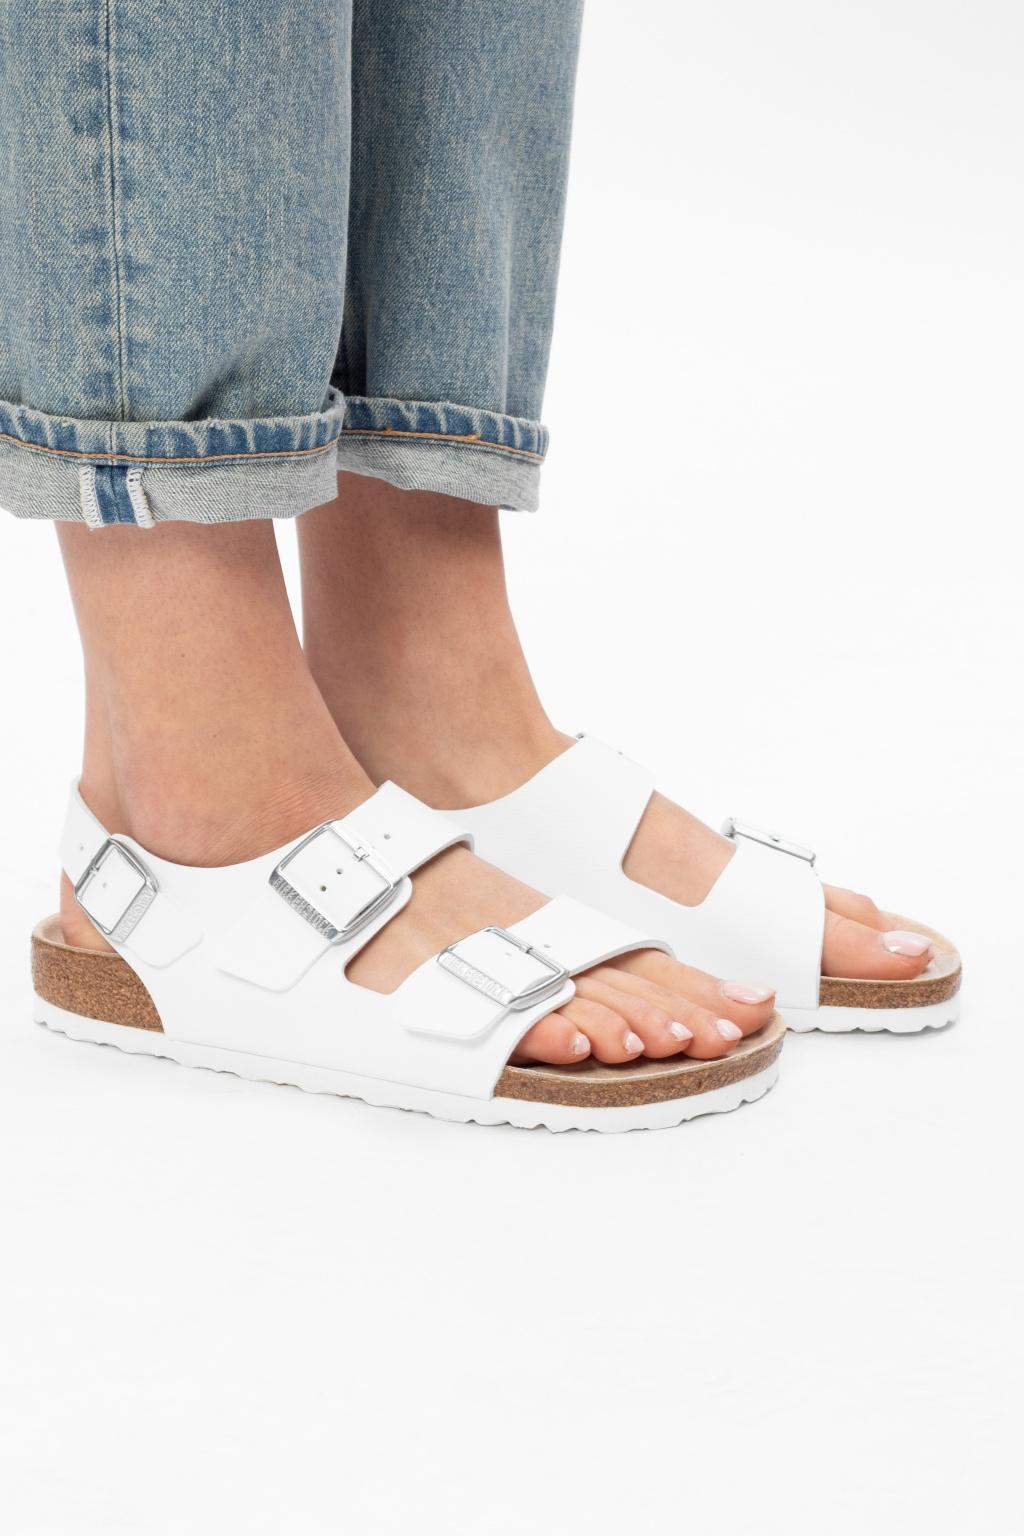 Birkenstock Leather 'milano' Sandals in White - Lyst